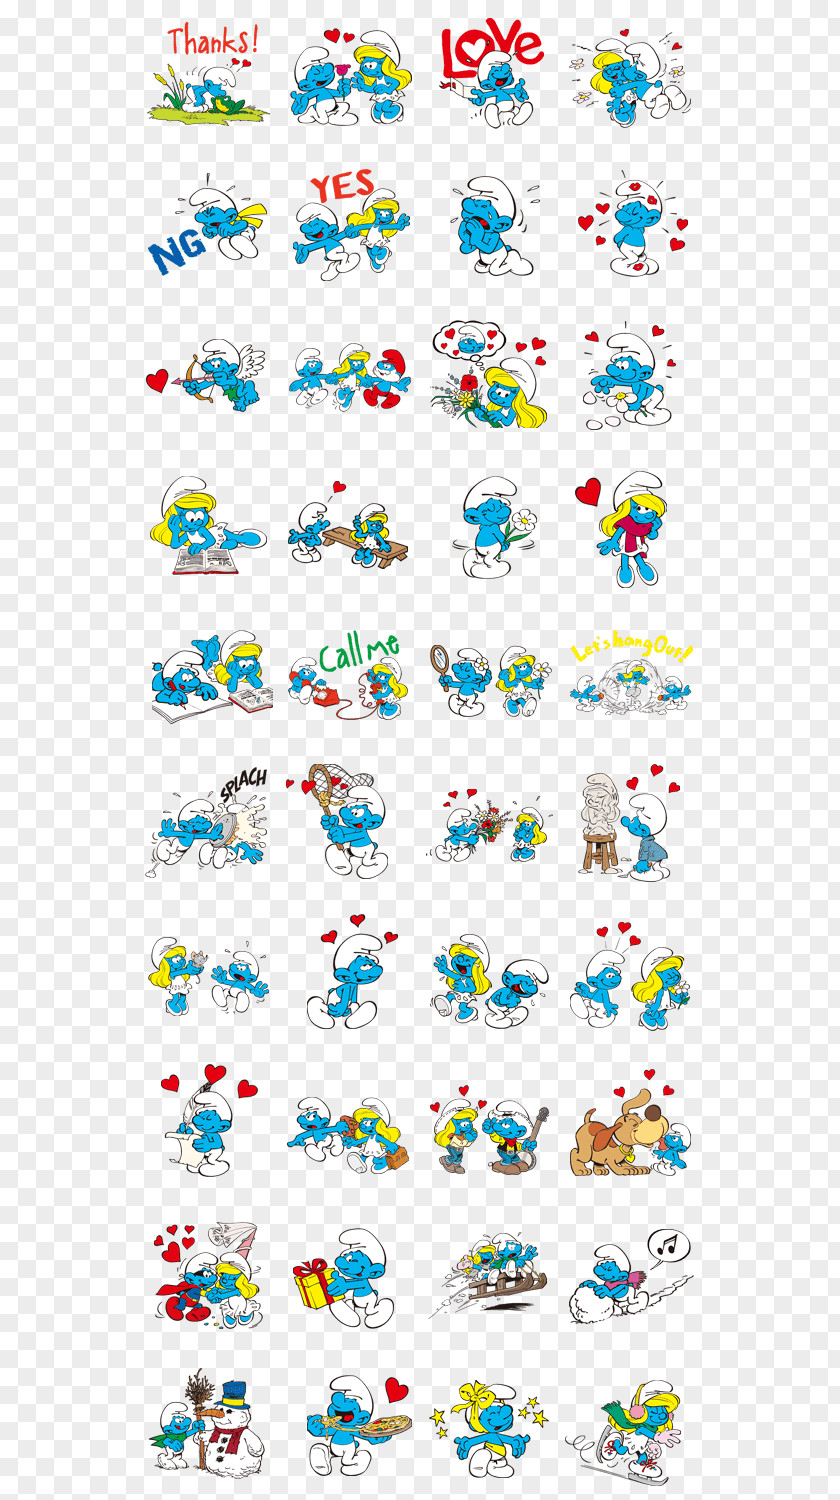 8 Bit LINE Sticker Smurfette The Smurfs Clip Art PNG